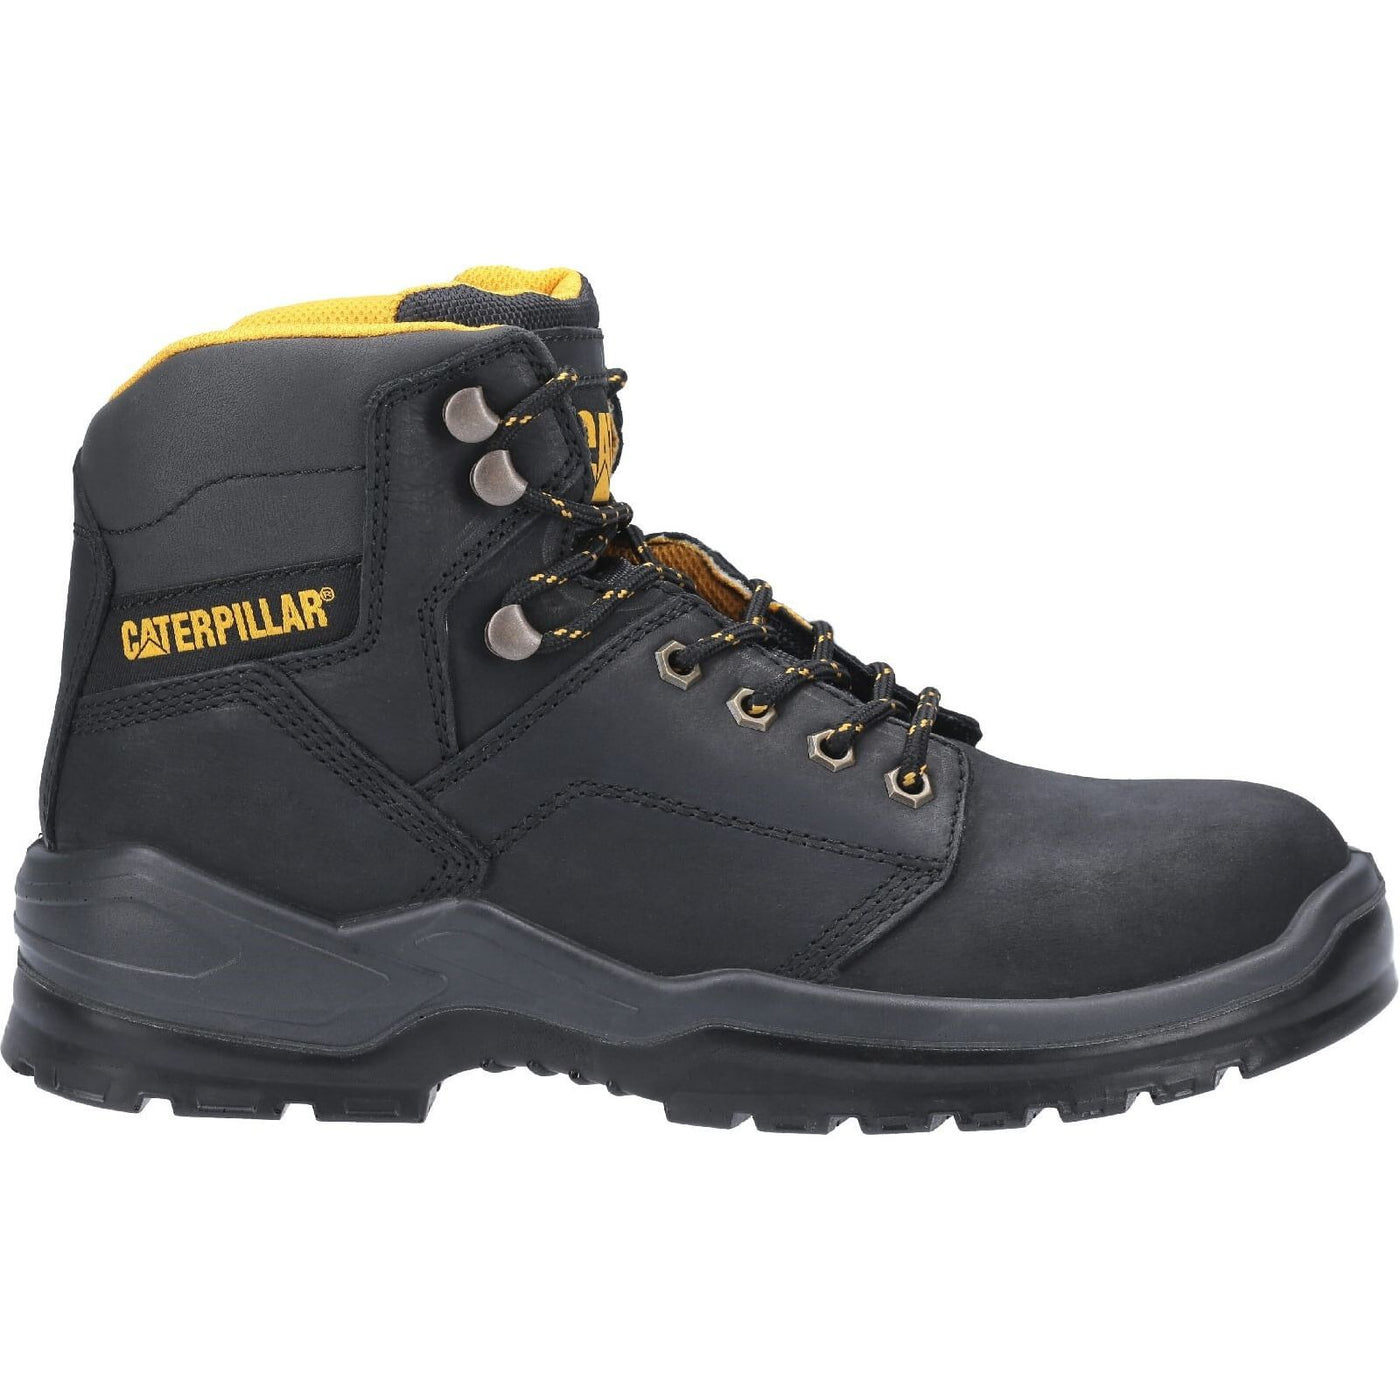 Caterpillar Striver Safety Boots-Black-4